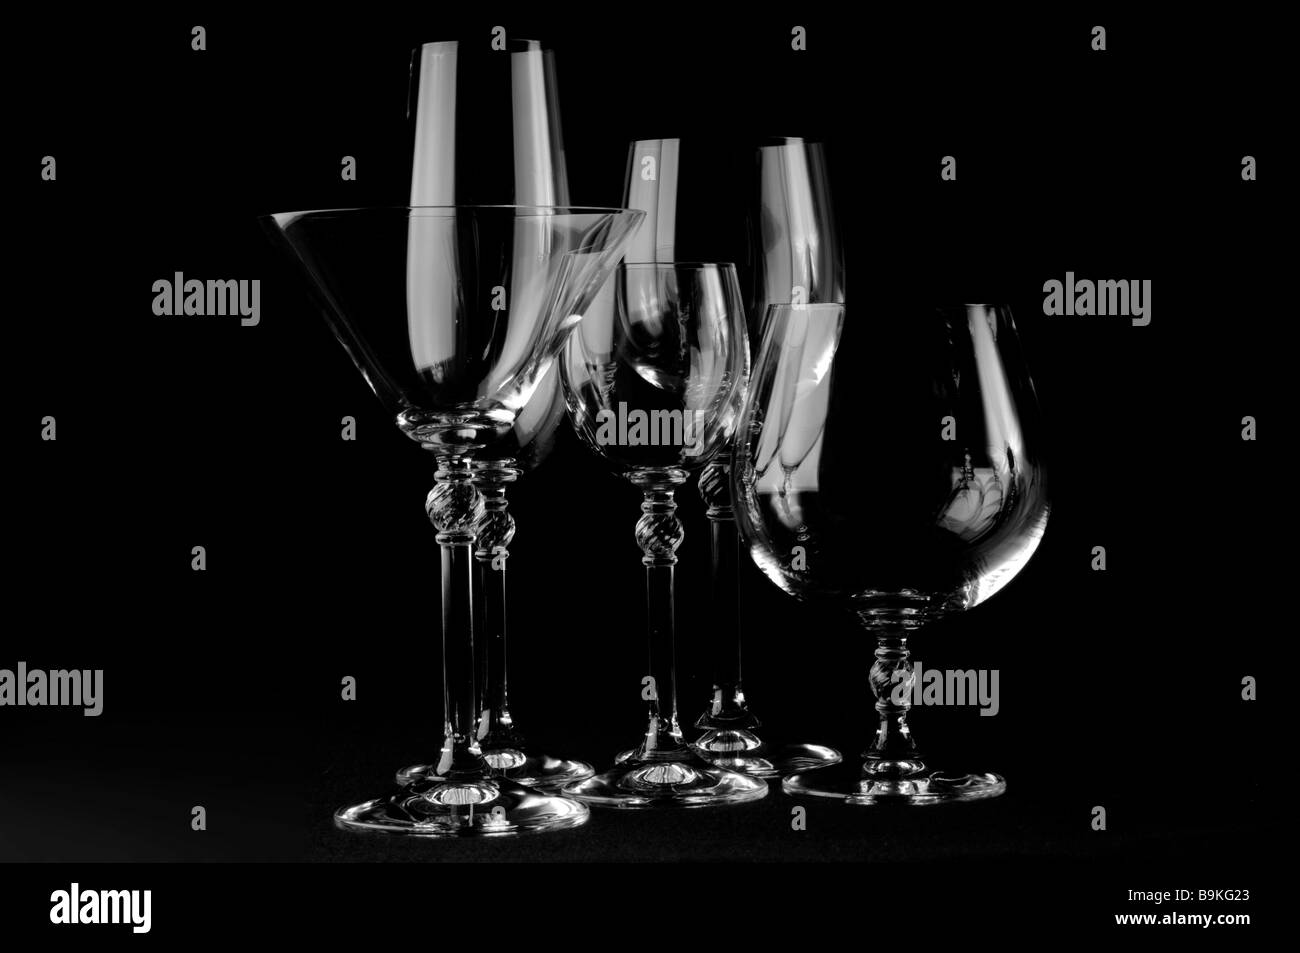 Glasses for wine martini vodka etc Stock Photo